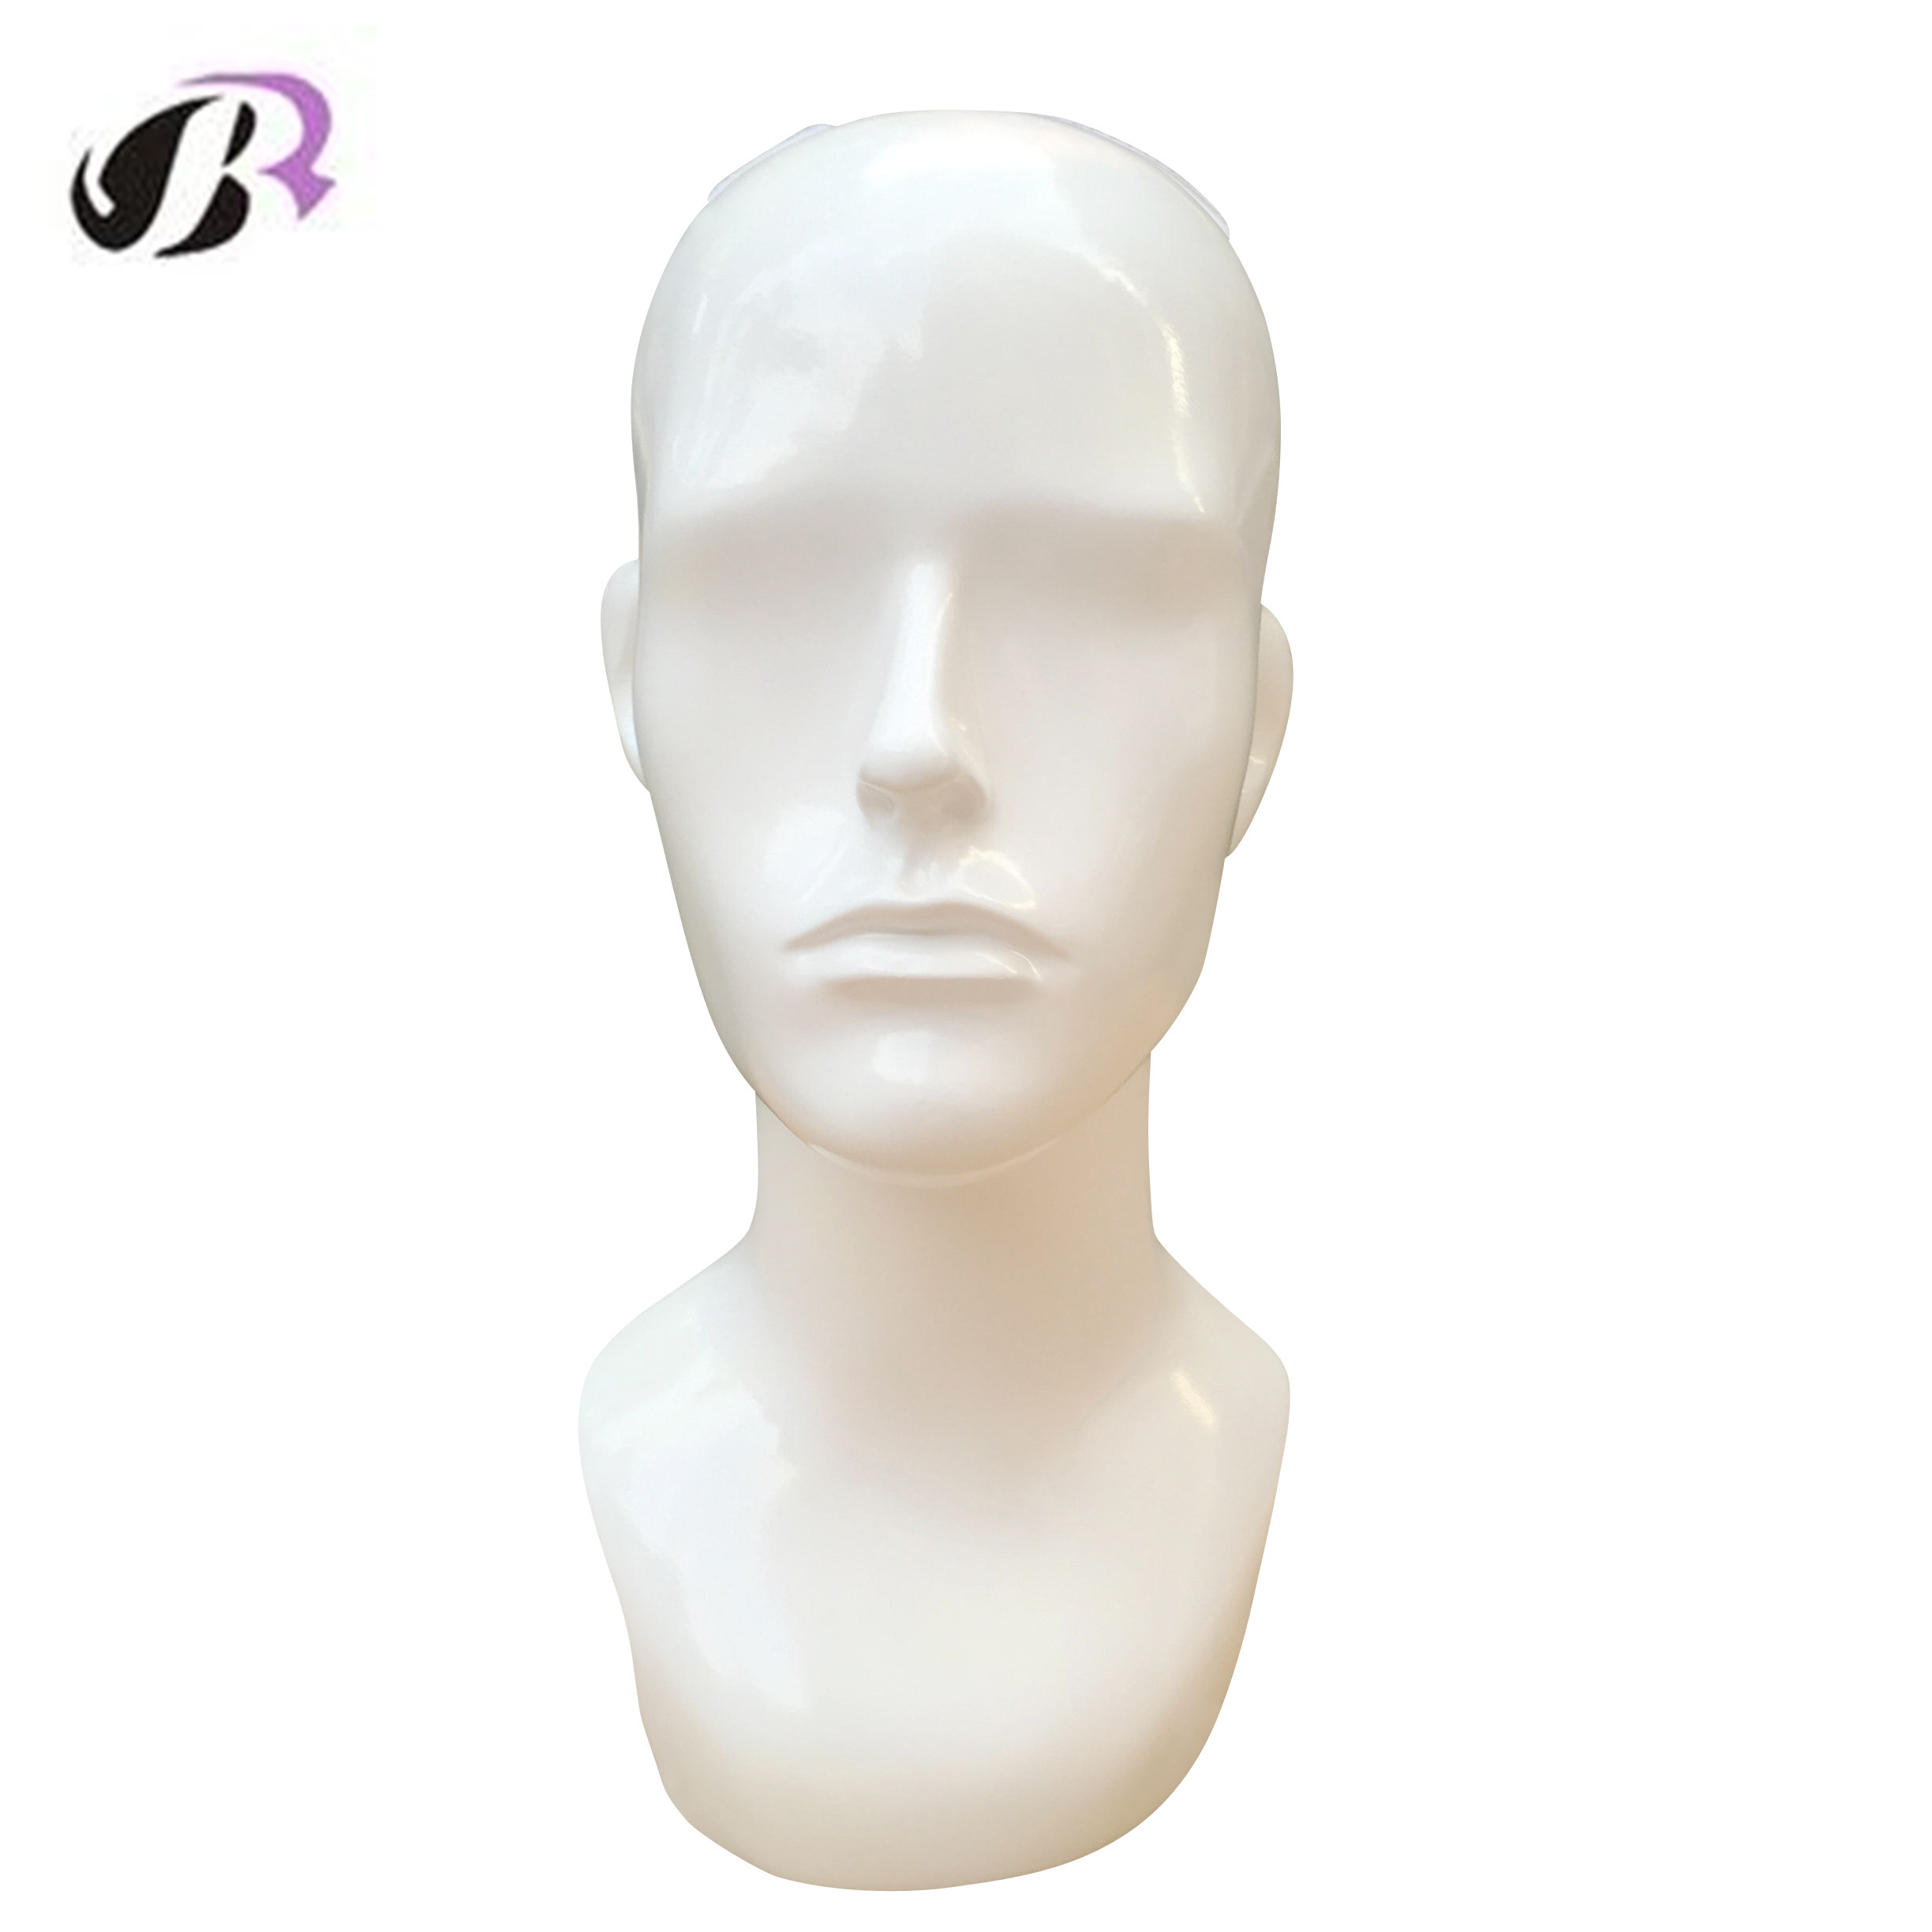 New White Hat Mannequin Head Men Mannequin Training Head For Hat/Wig Display Plastic Dummy Head for Practice Eyelash Manikin